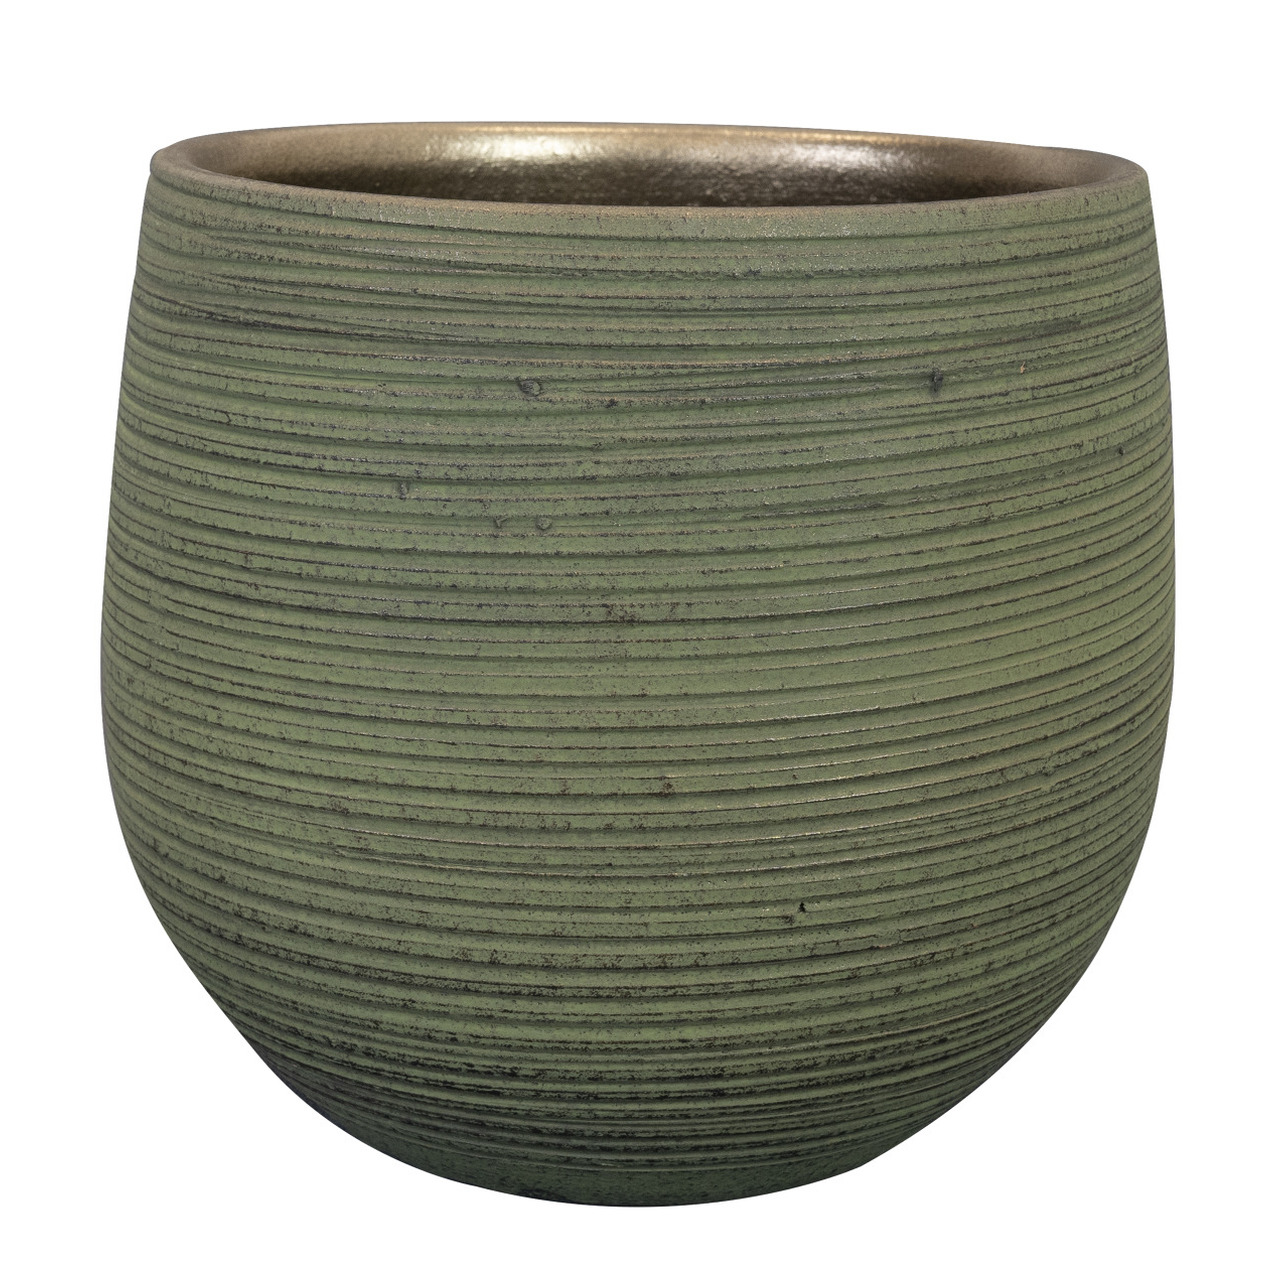 Ter Steege Plantenpot/bloempot keramiek donkergroen stripes relief - D22/H20 cm -